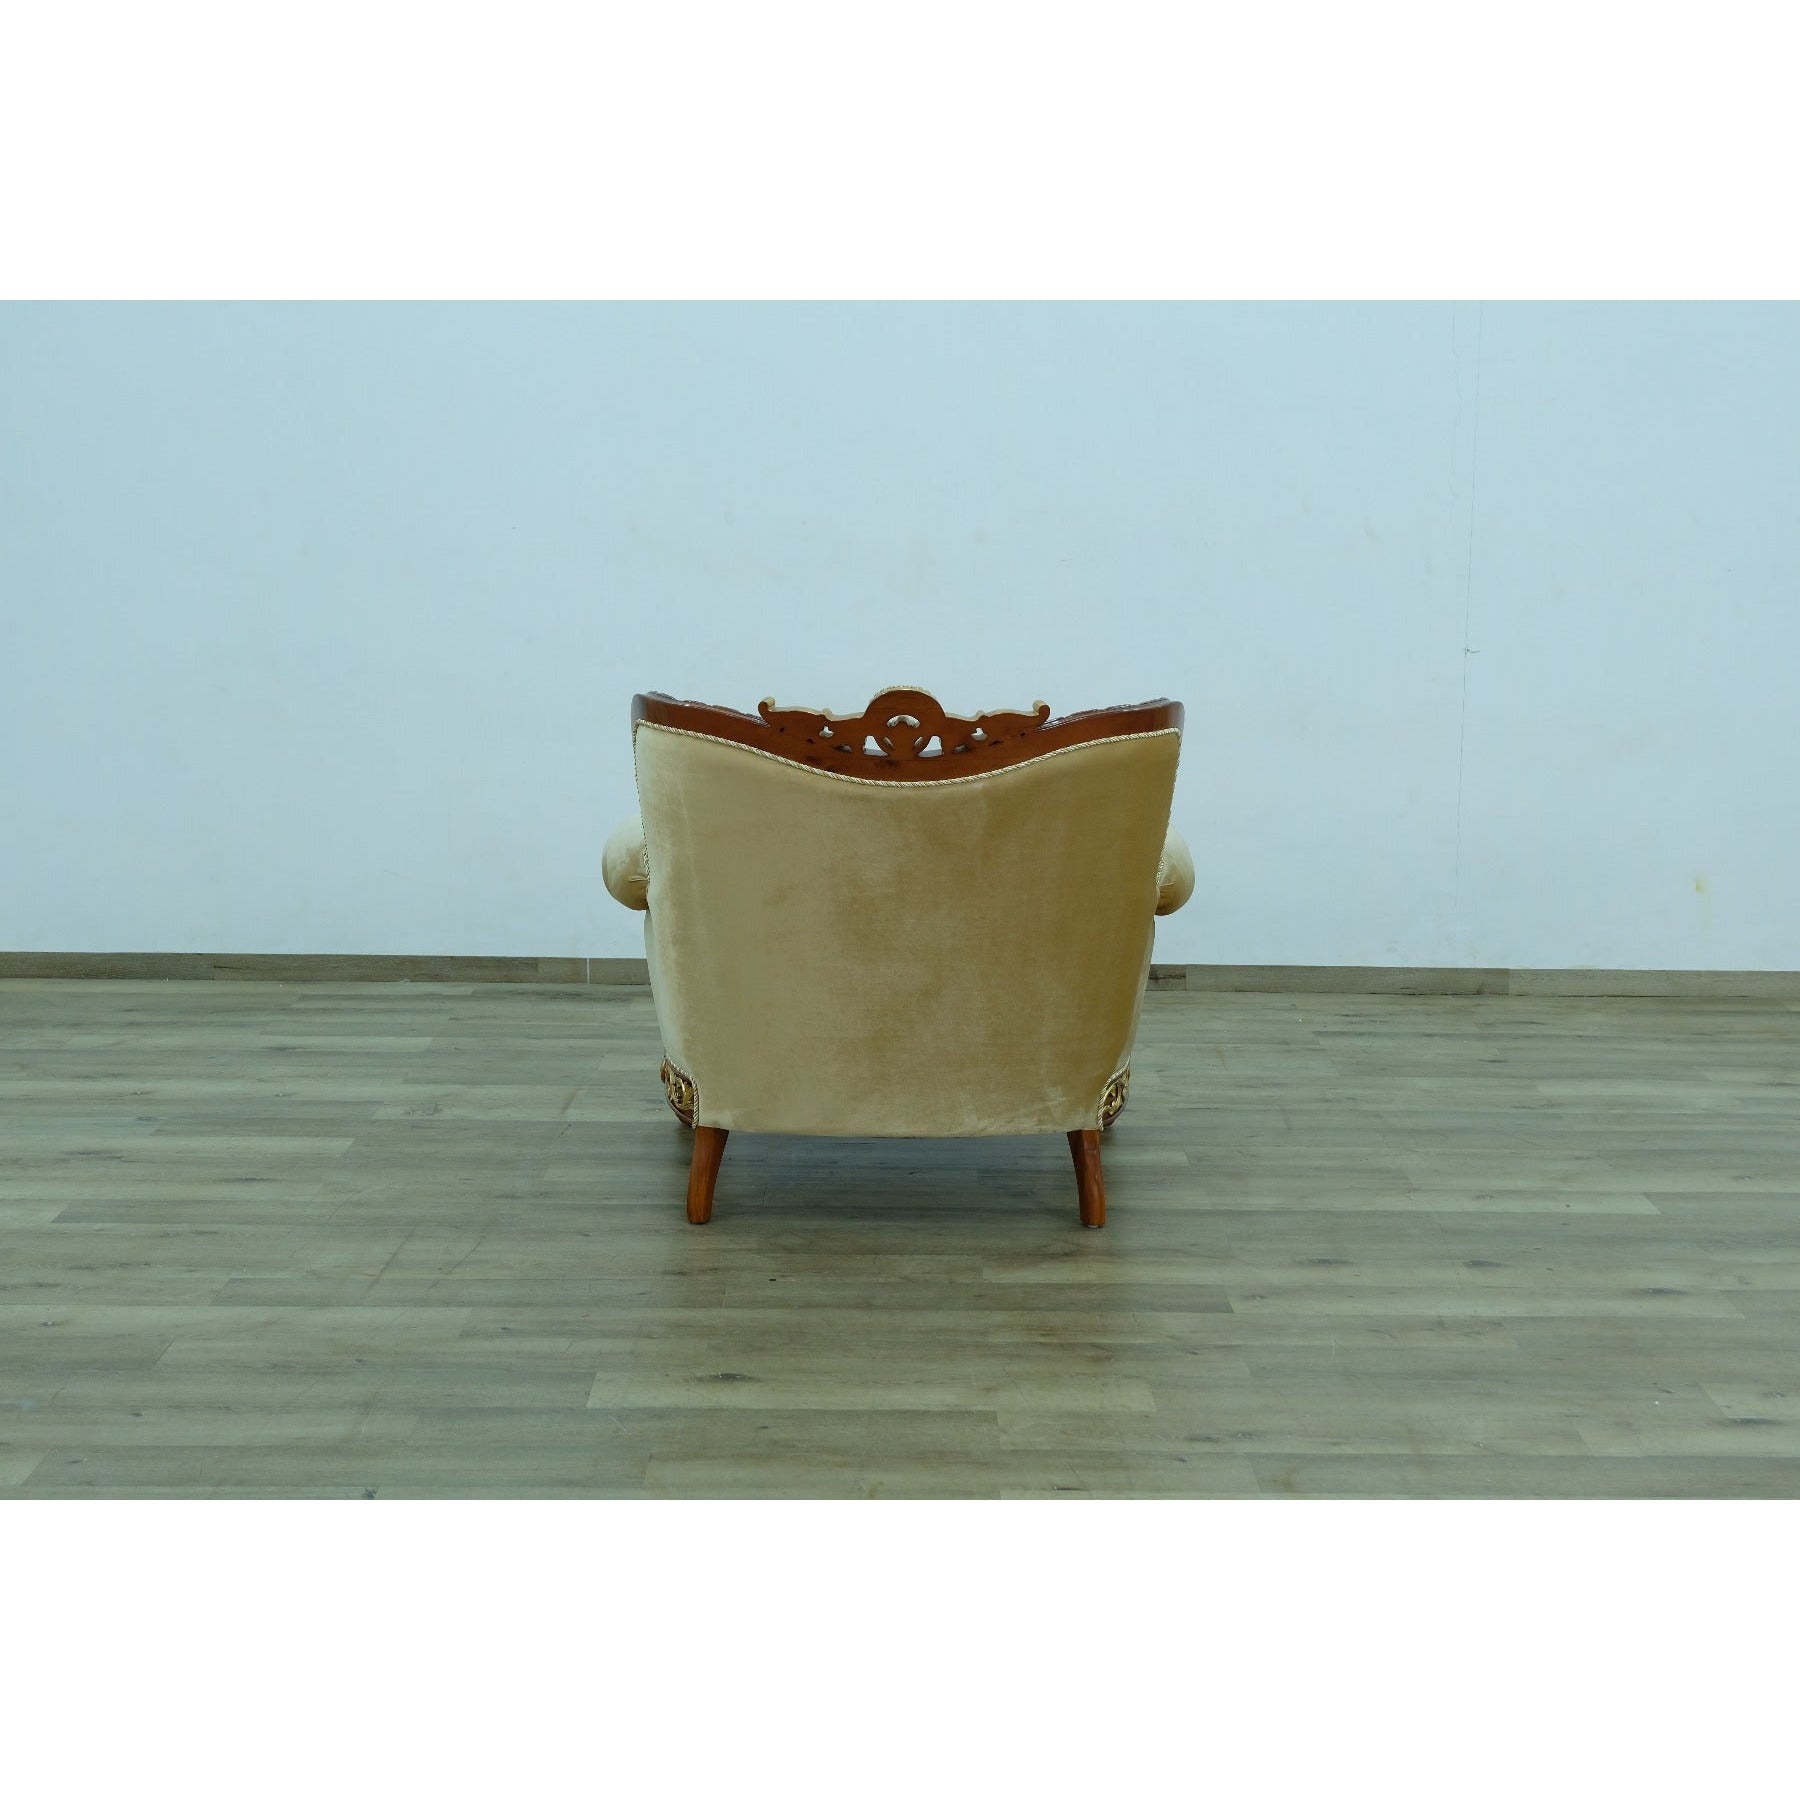 European Furniture - Fantasia II Chair in Gold-Brown - 40019-C - New Star Living